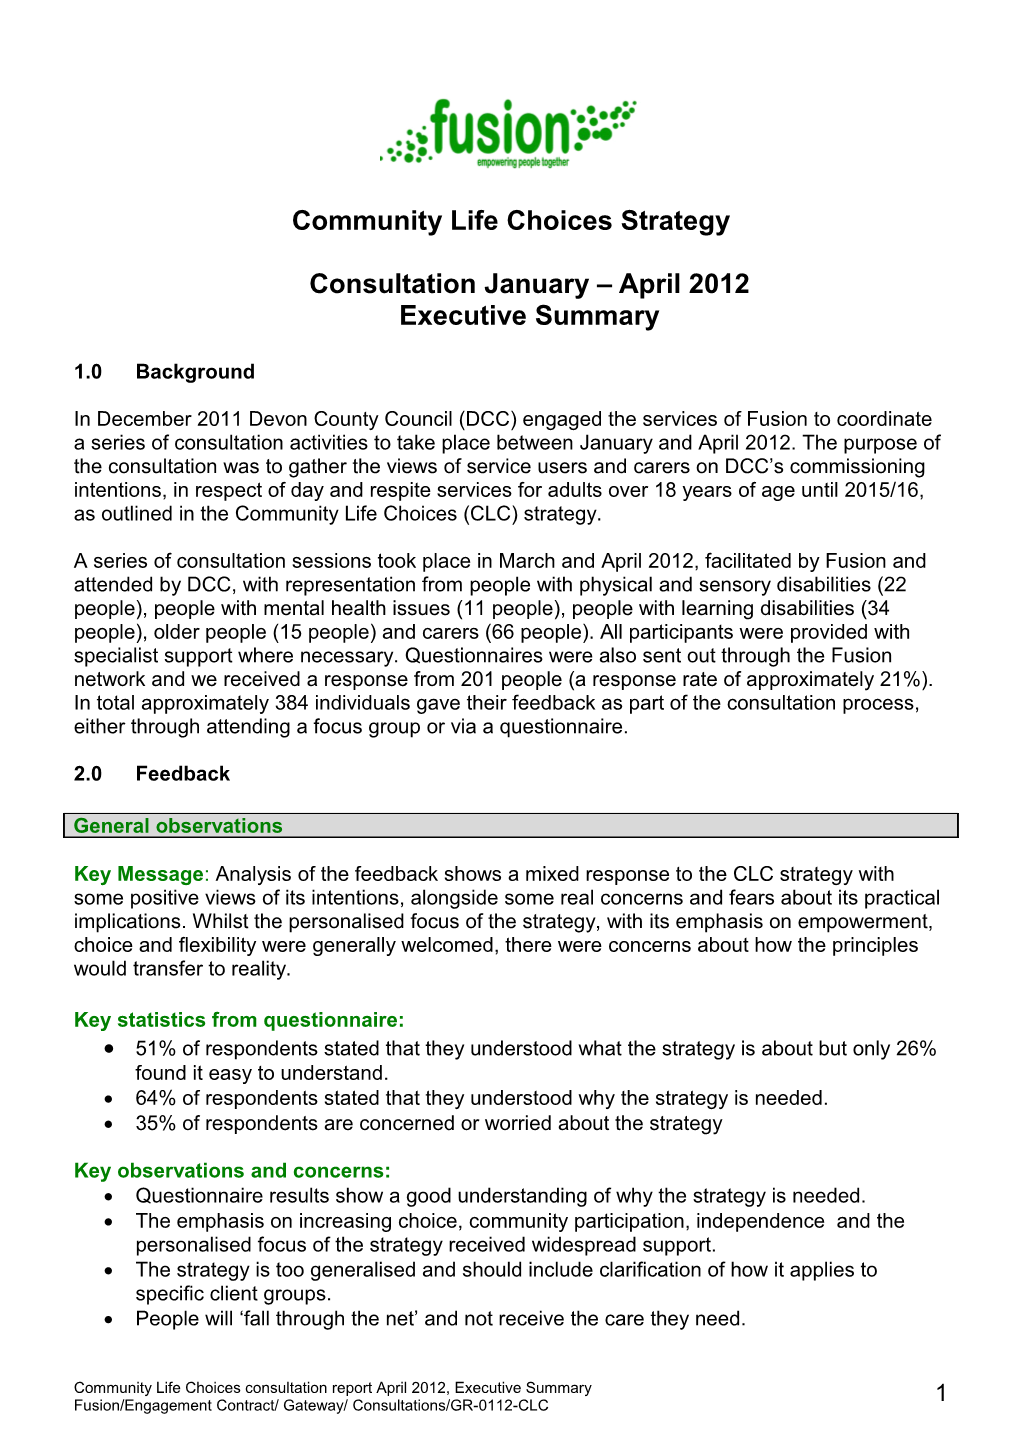 Community Life Choices Strategyconsultation January April 2012Executive Summary